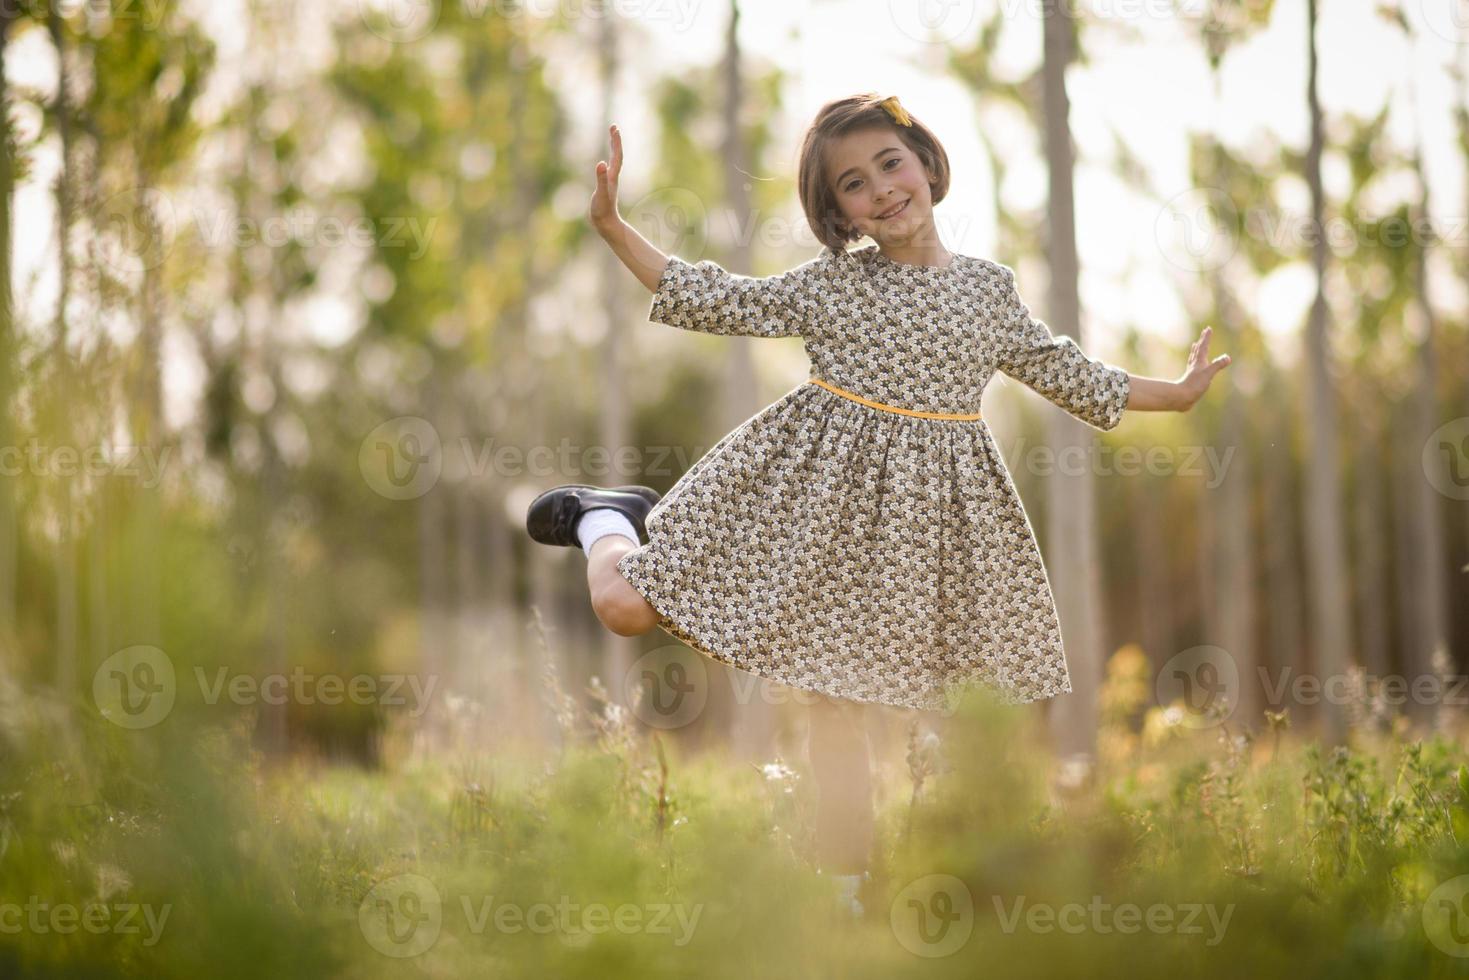 klein meisje in de natuur met mooie jurk foto